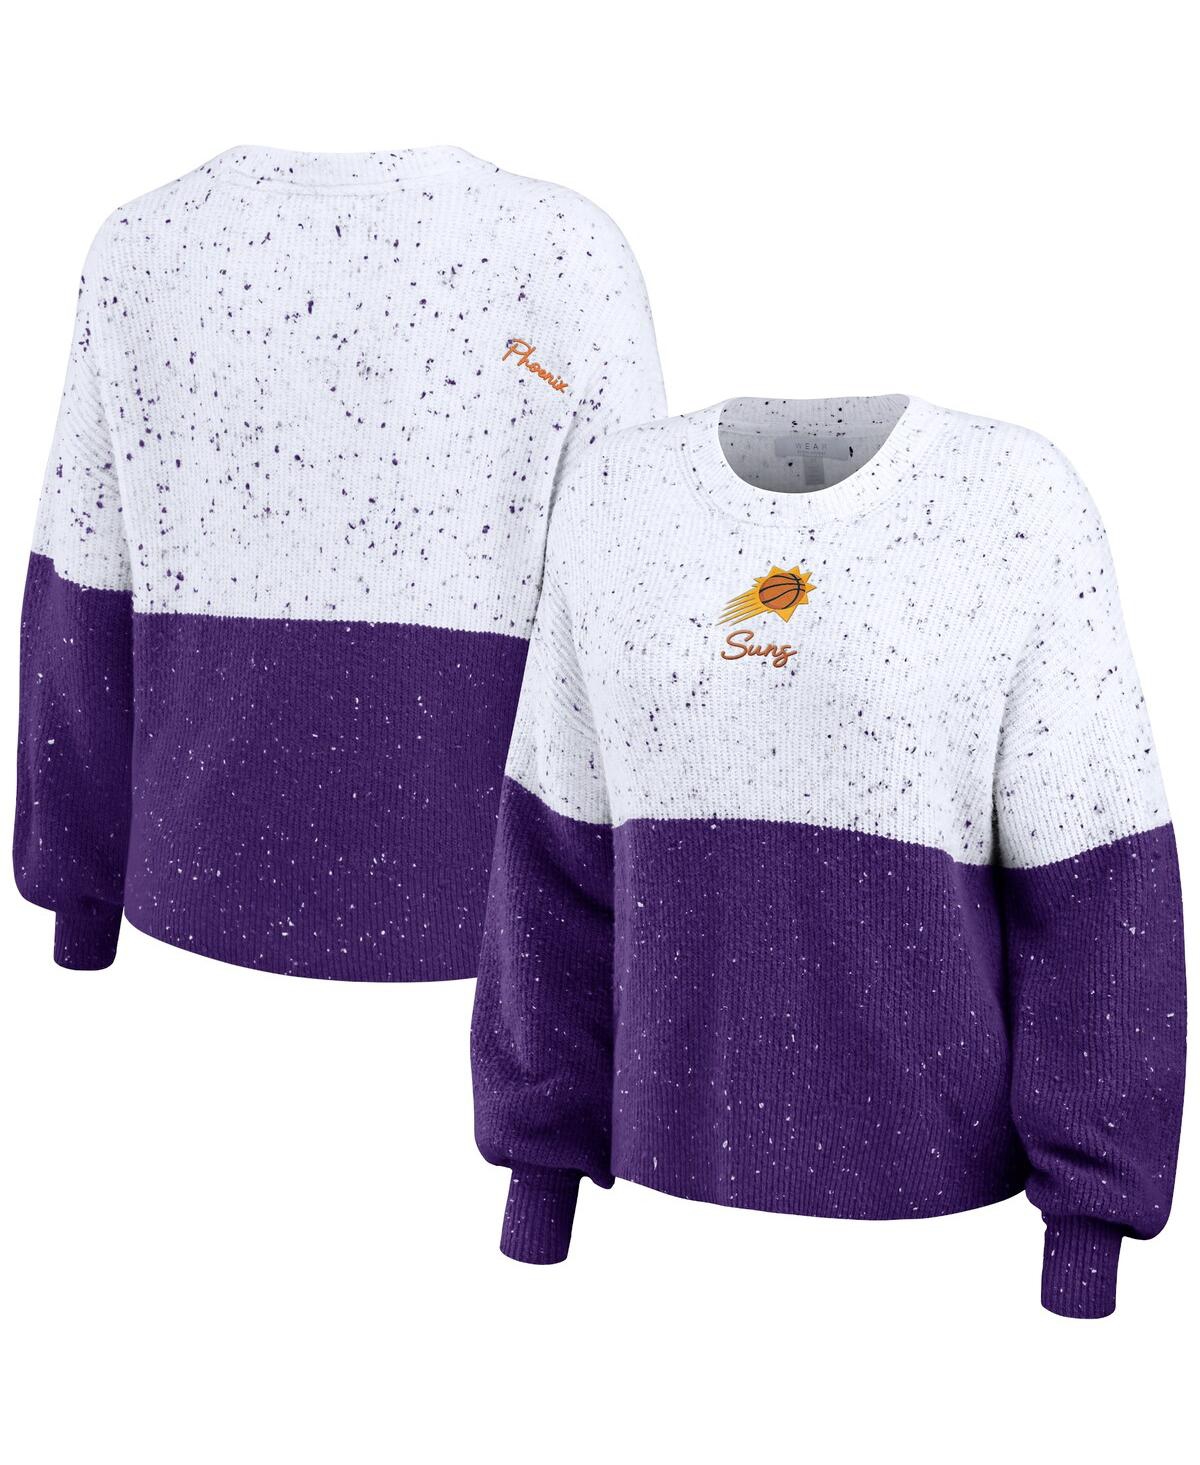 Women's Wear by Erin Andrews White, Purple Phoenix Suns Color-Block Pullover Sweater - White, Purple